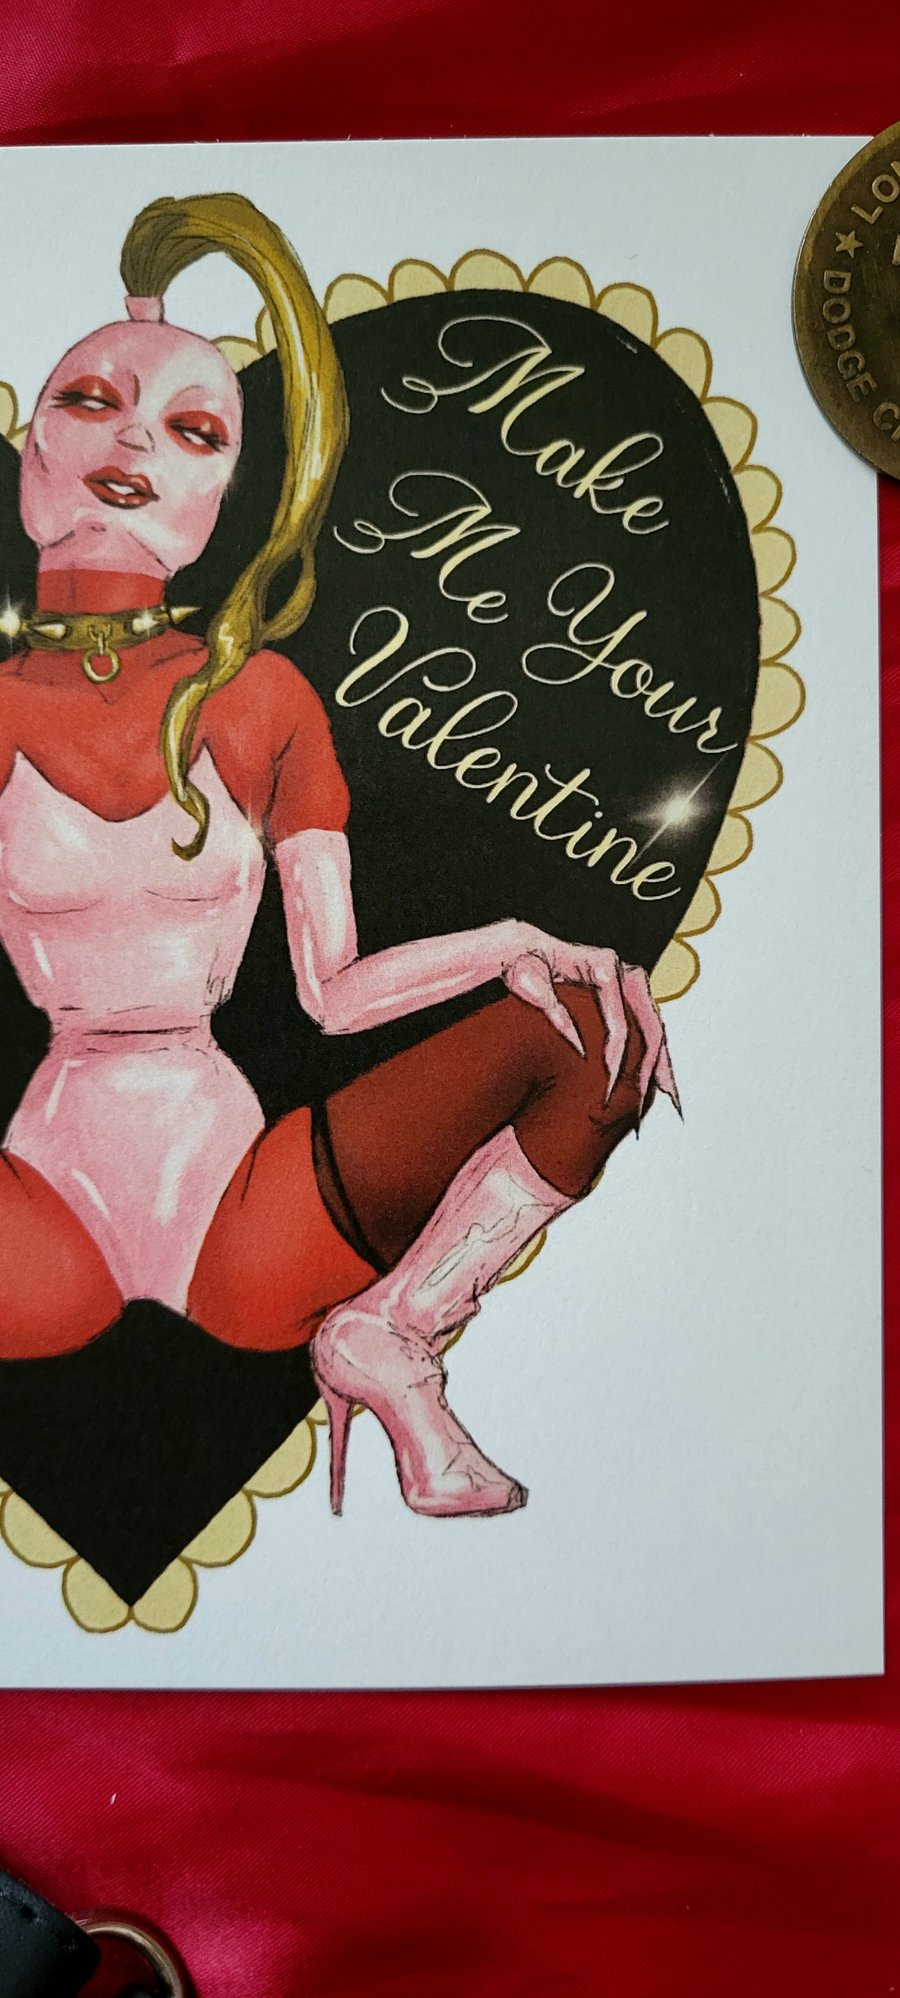 Image of "Begging You" Valentine Card